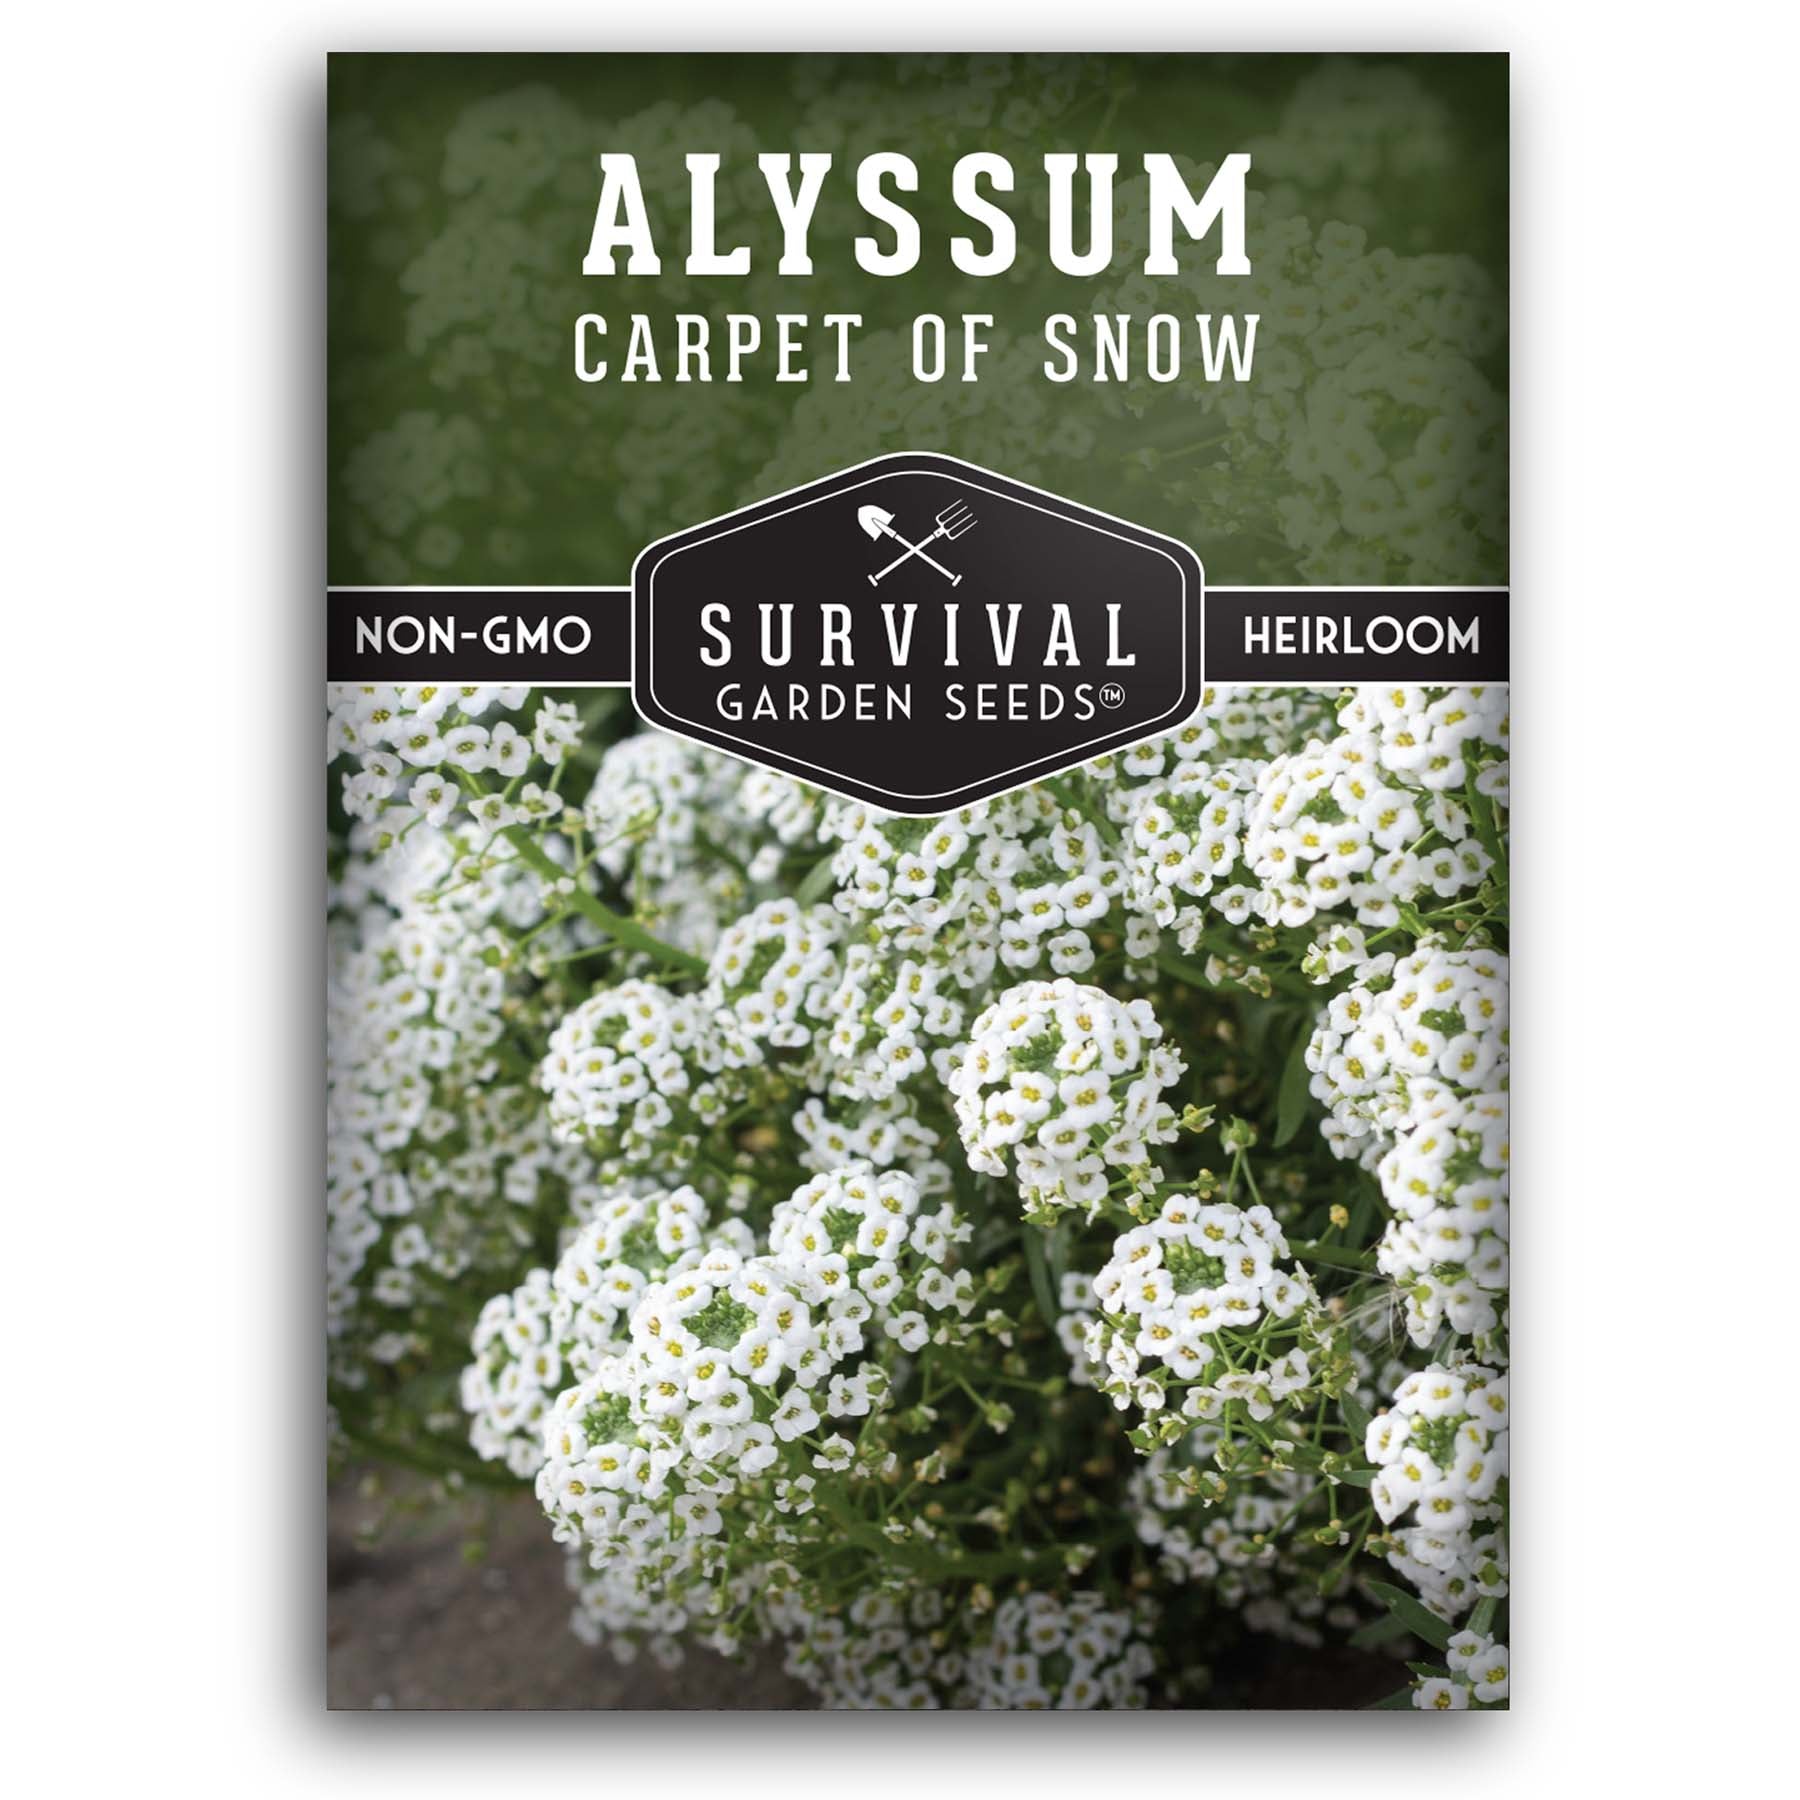 Carpet of Snow Alyssum seeds for planting